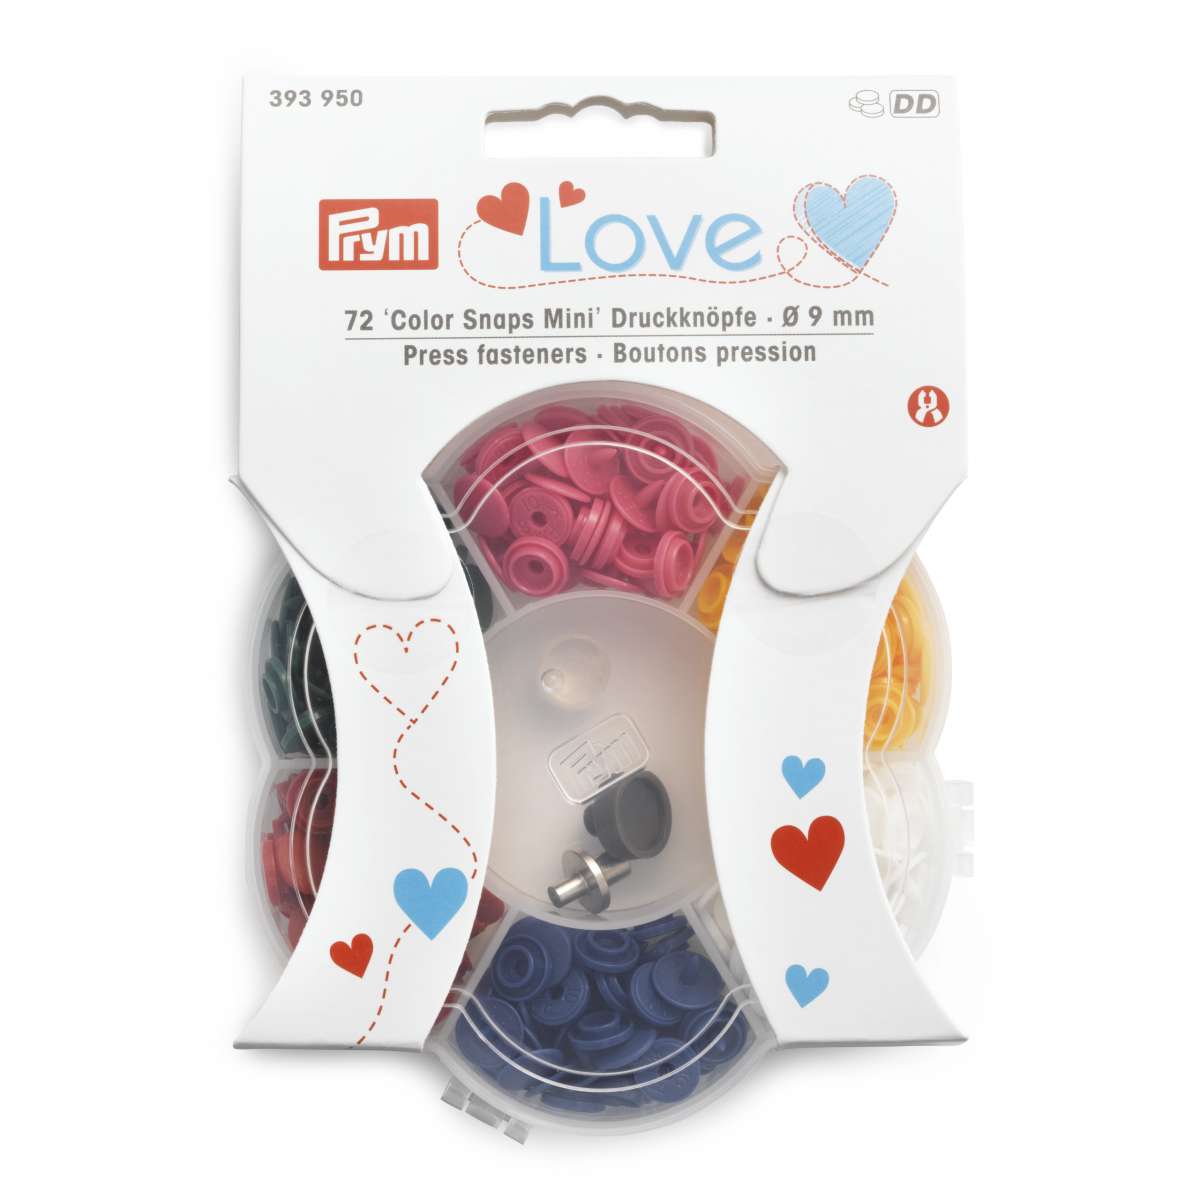 Prym Love Press Fasteners Colour Snaps Mini incl. tools set, 9 mm